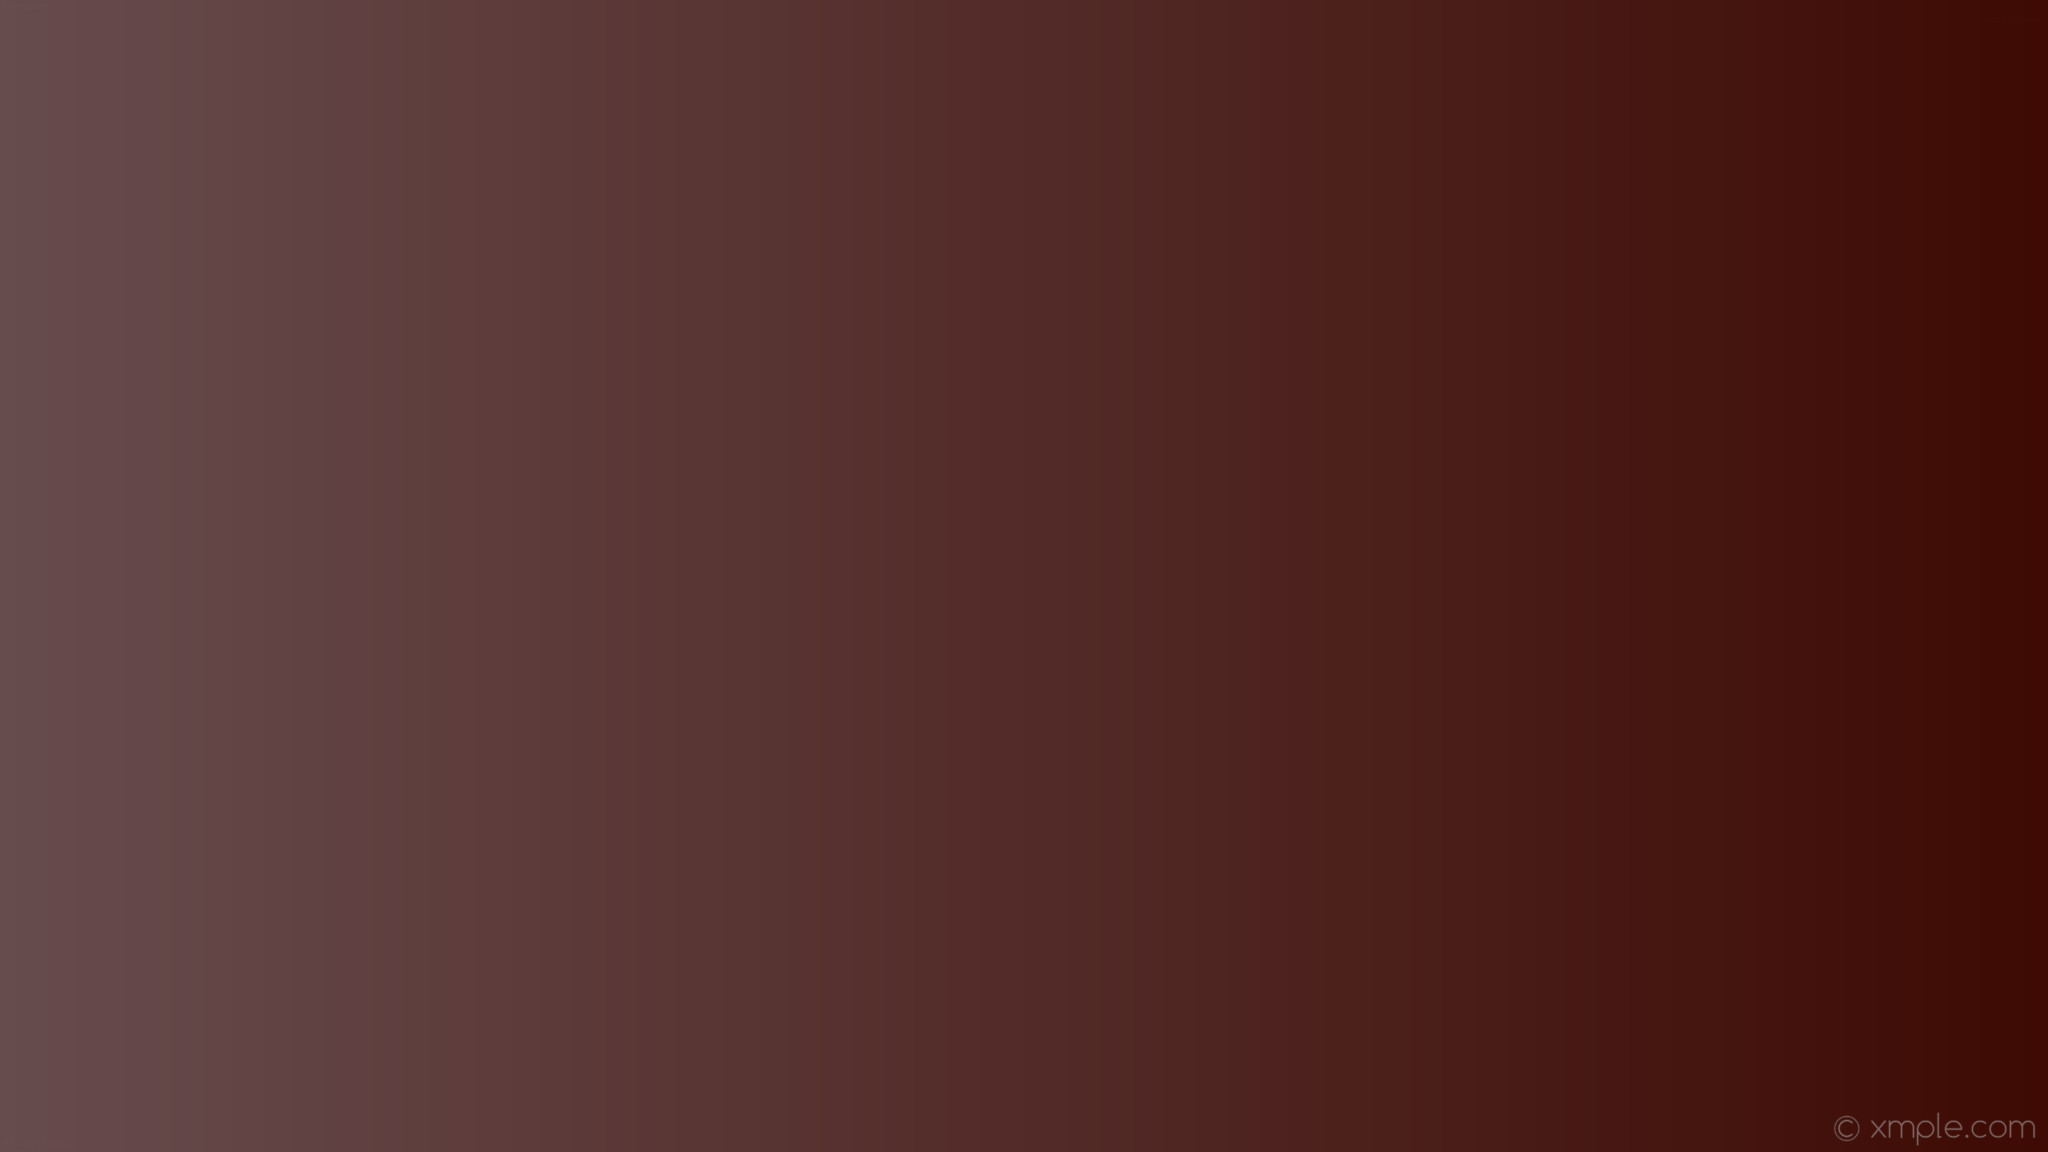 2048x1152 wallpaper red gradient linear dark red #3e0a03 #674c4d 0Â°